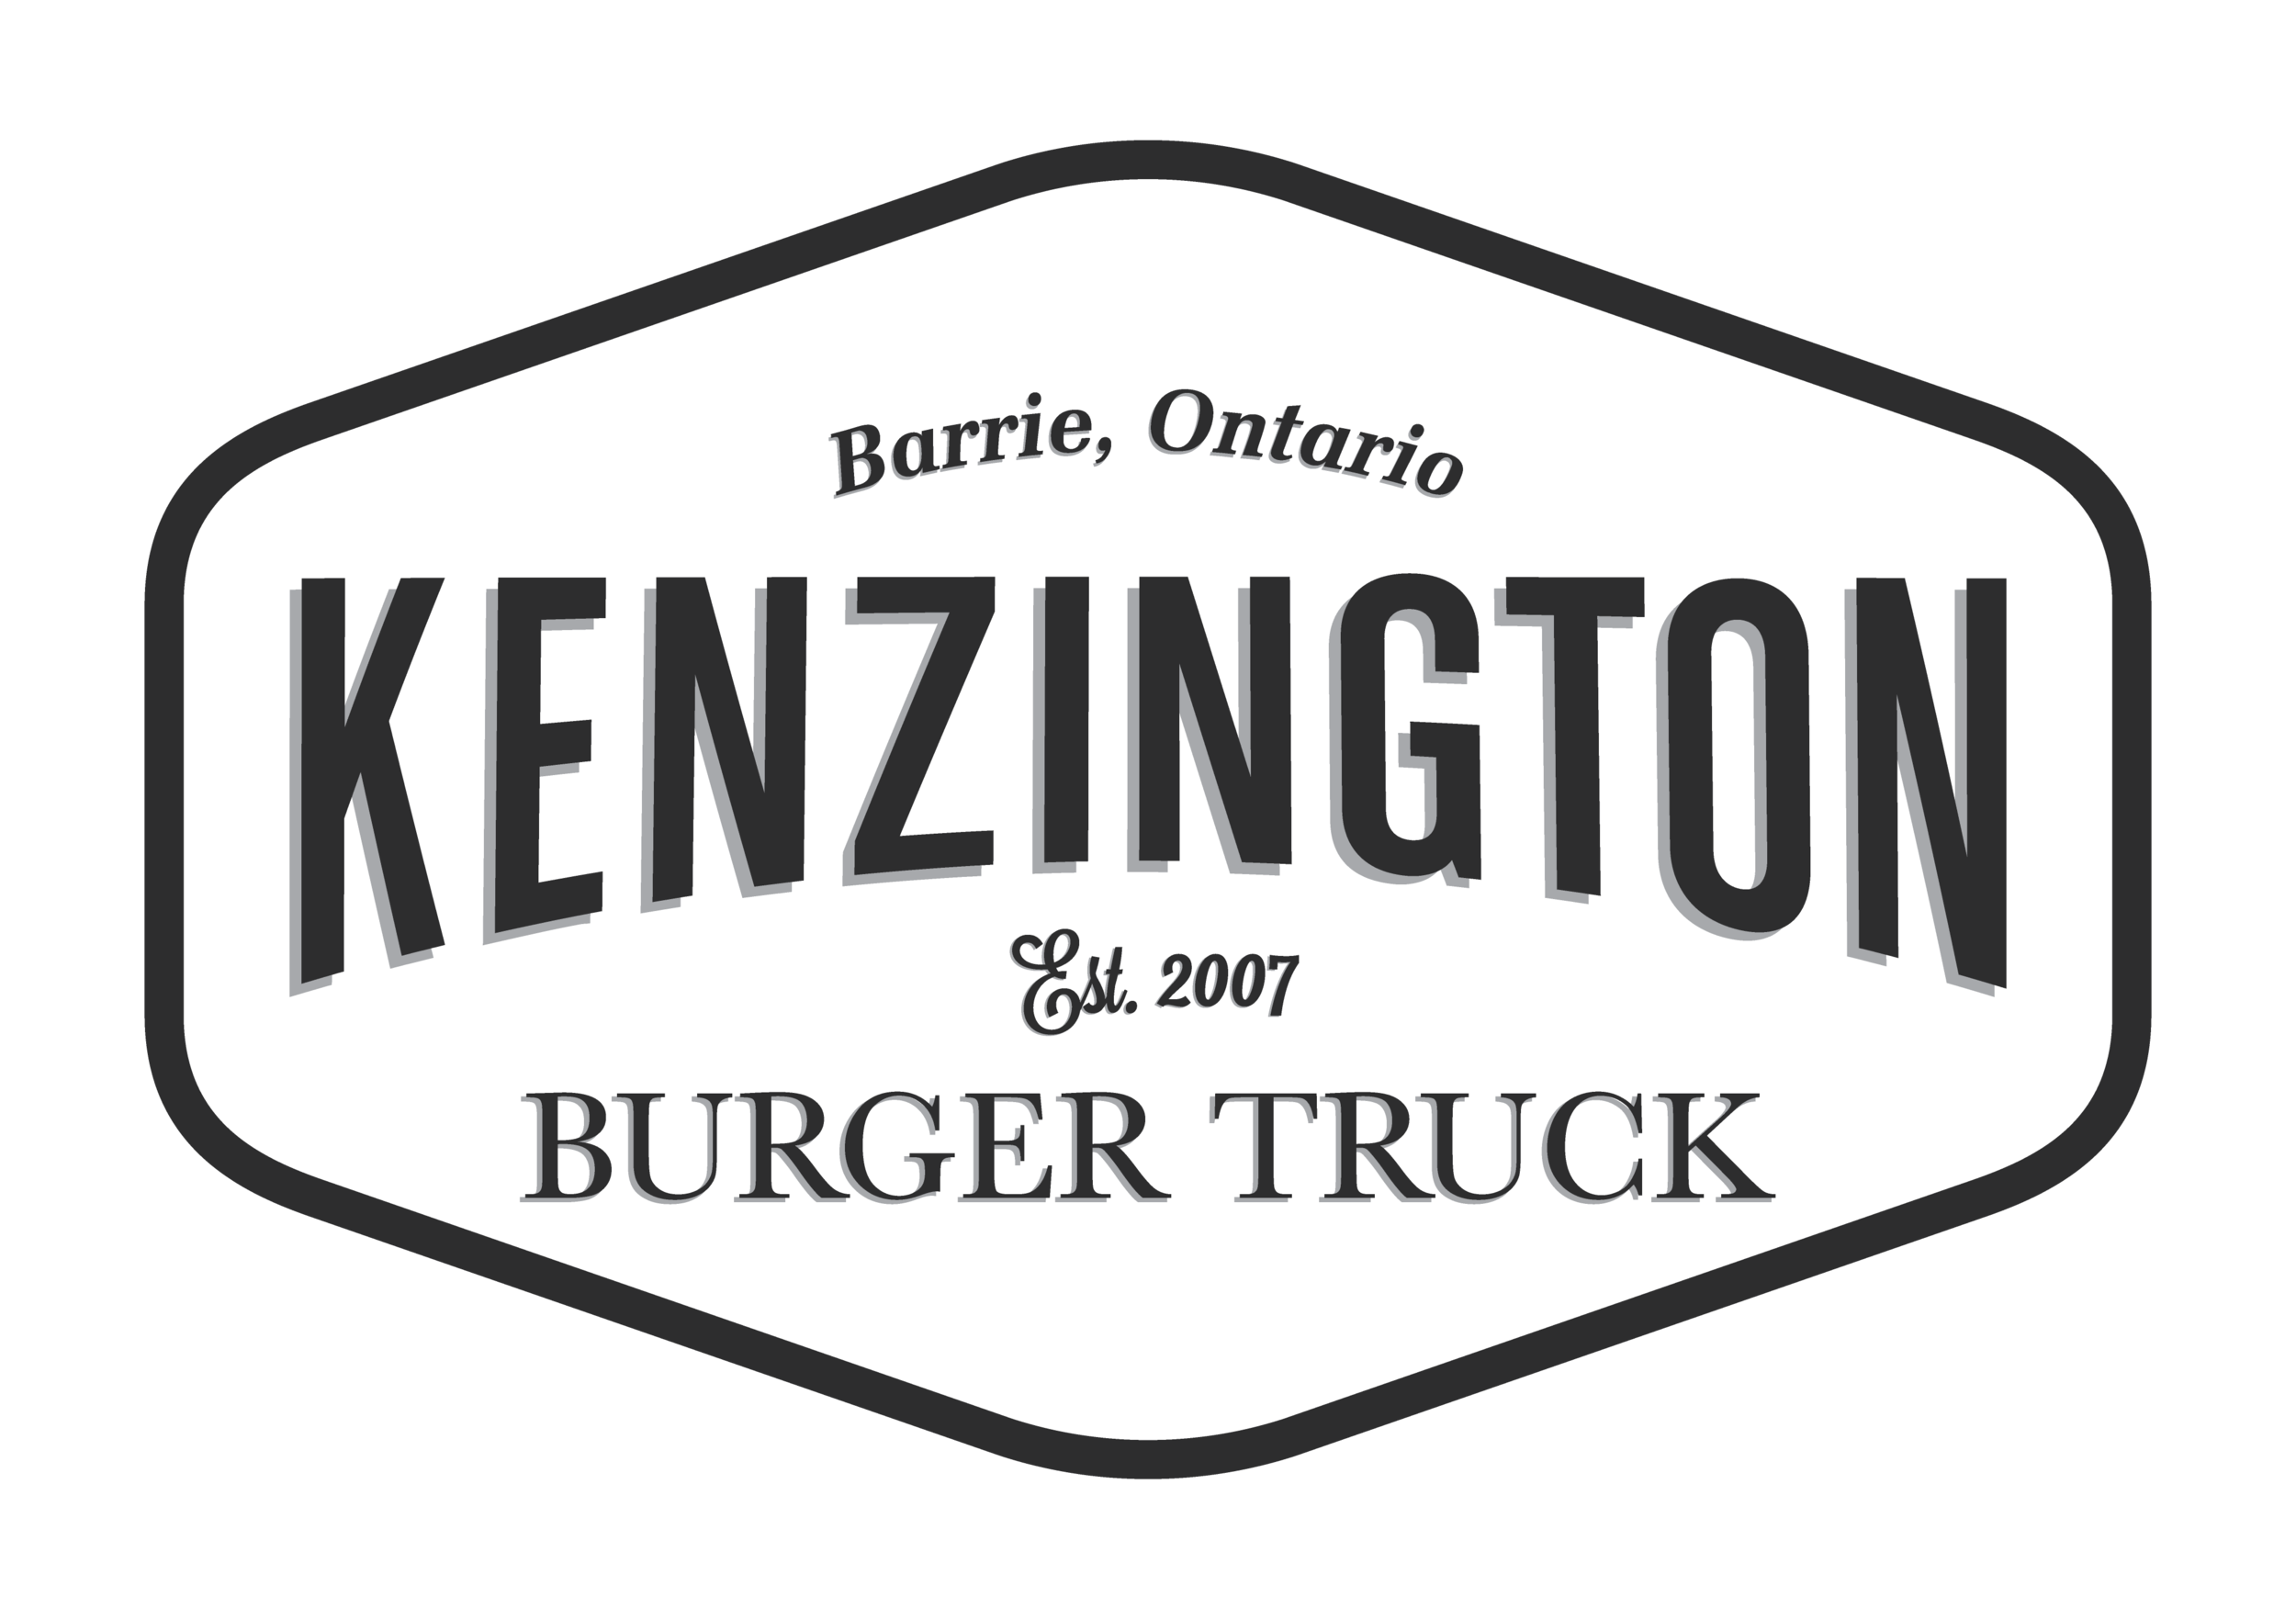 Kenzington_LG_Black_Master_BurgerT.png